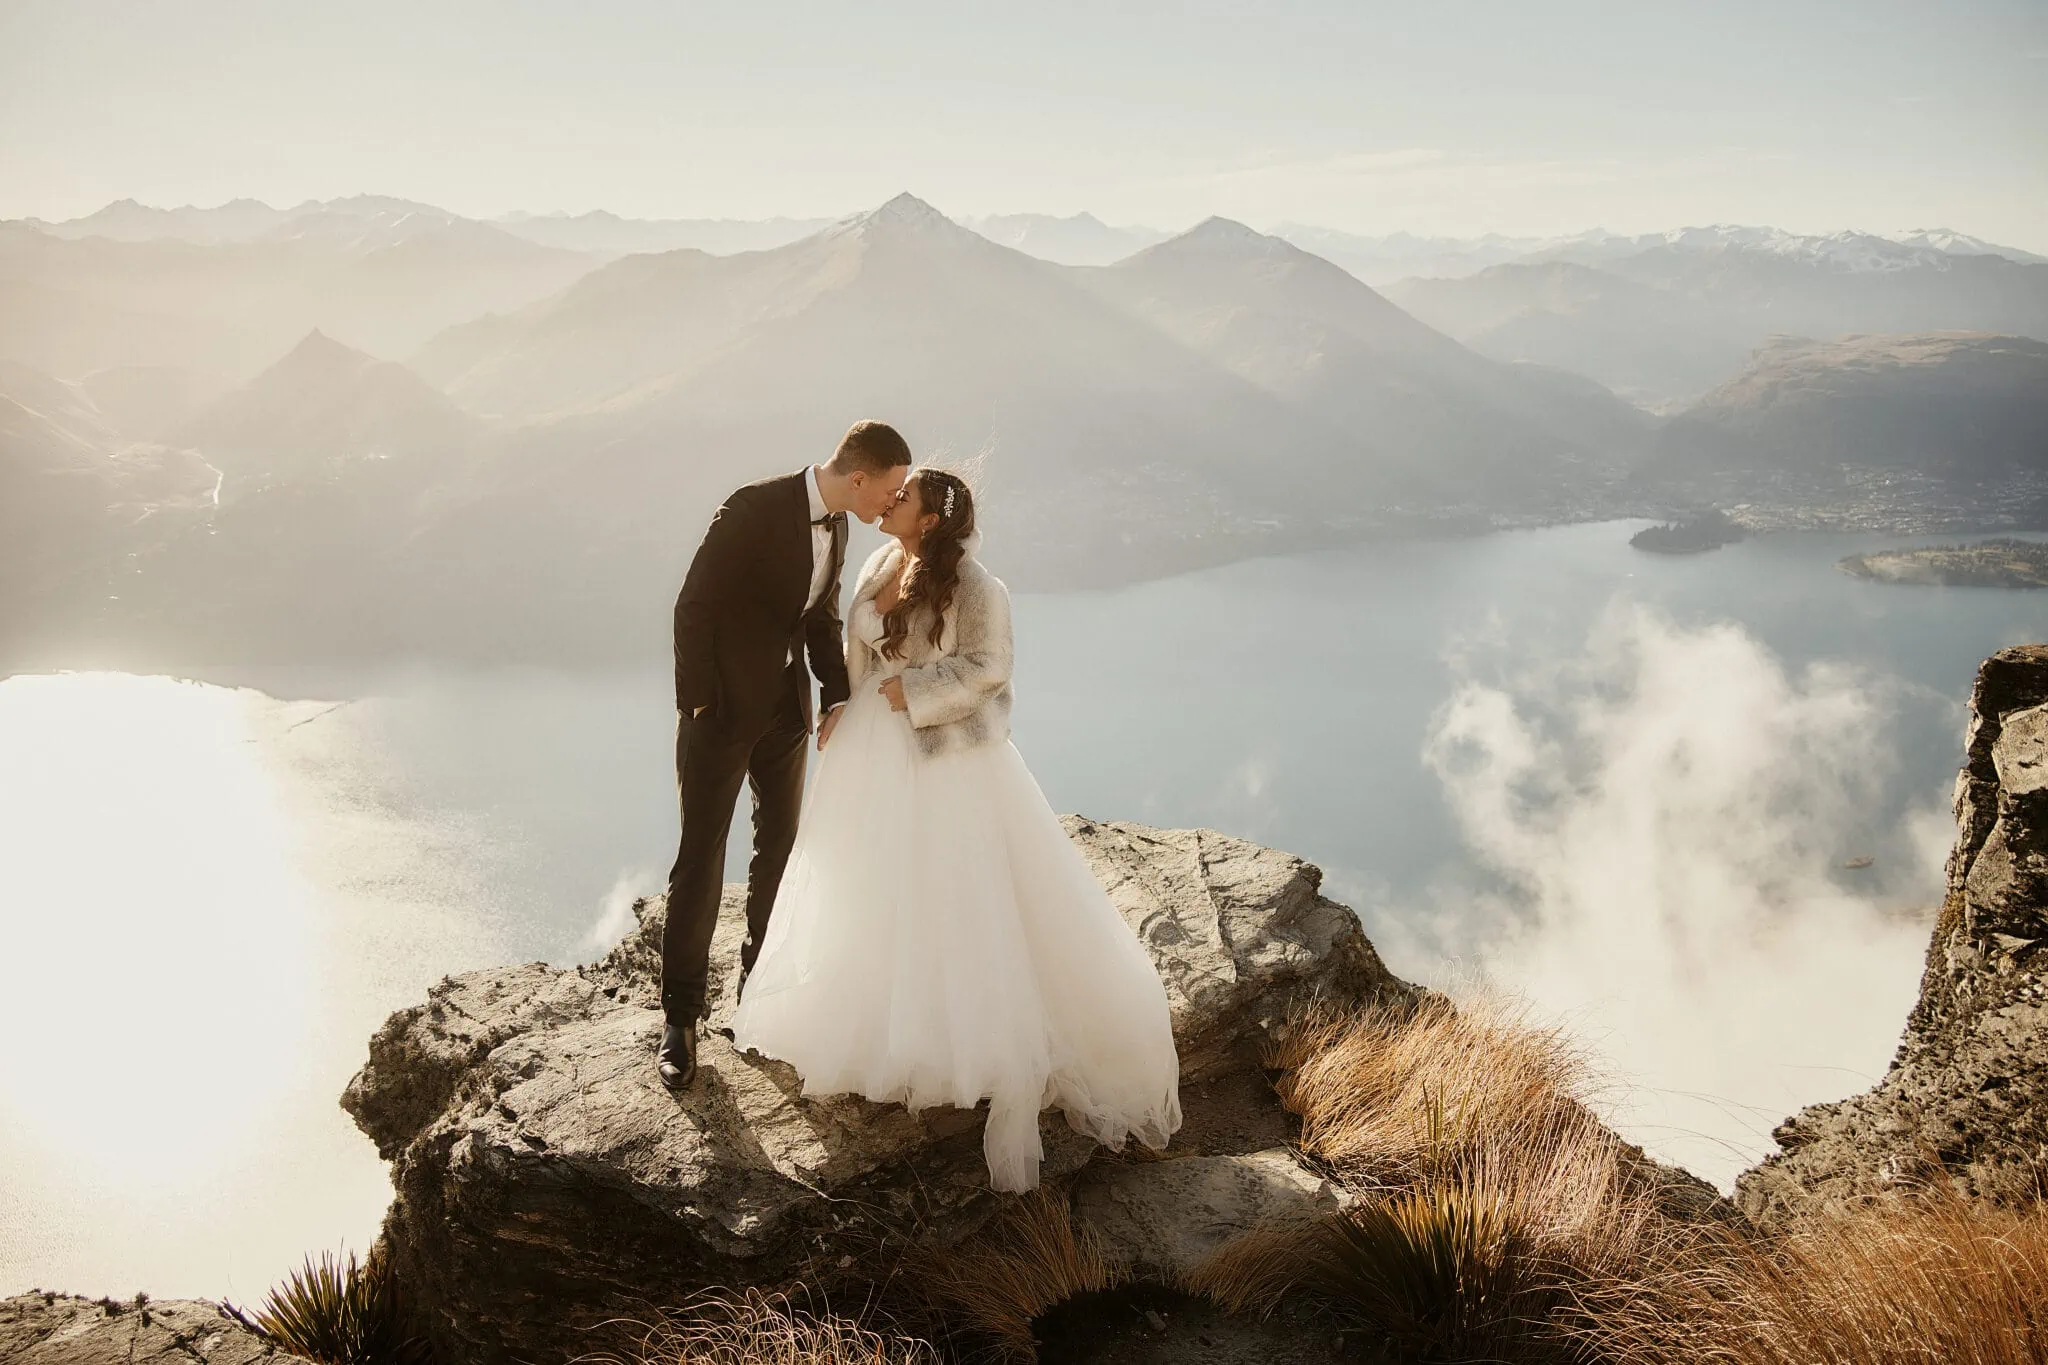 Queenstown New Zealand Elopement Wedding Photographer - Amy and Callum having a Queenstown Heli Pre Wedding Shoot on top of a mountain overlooking Lake Wanaka.